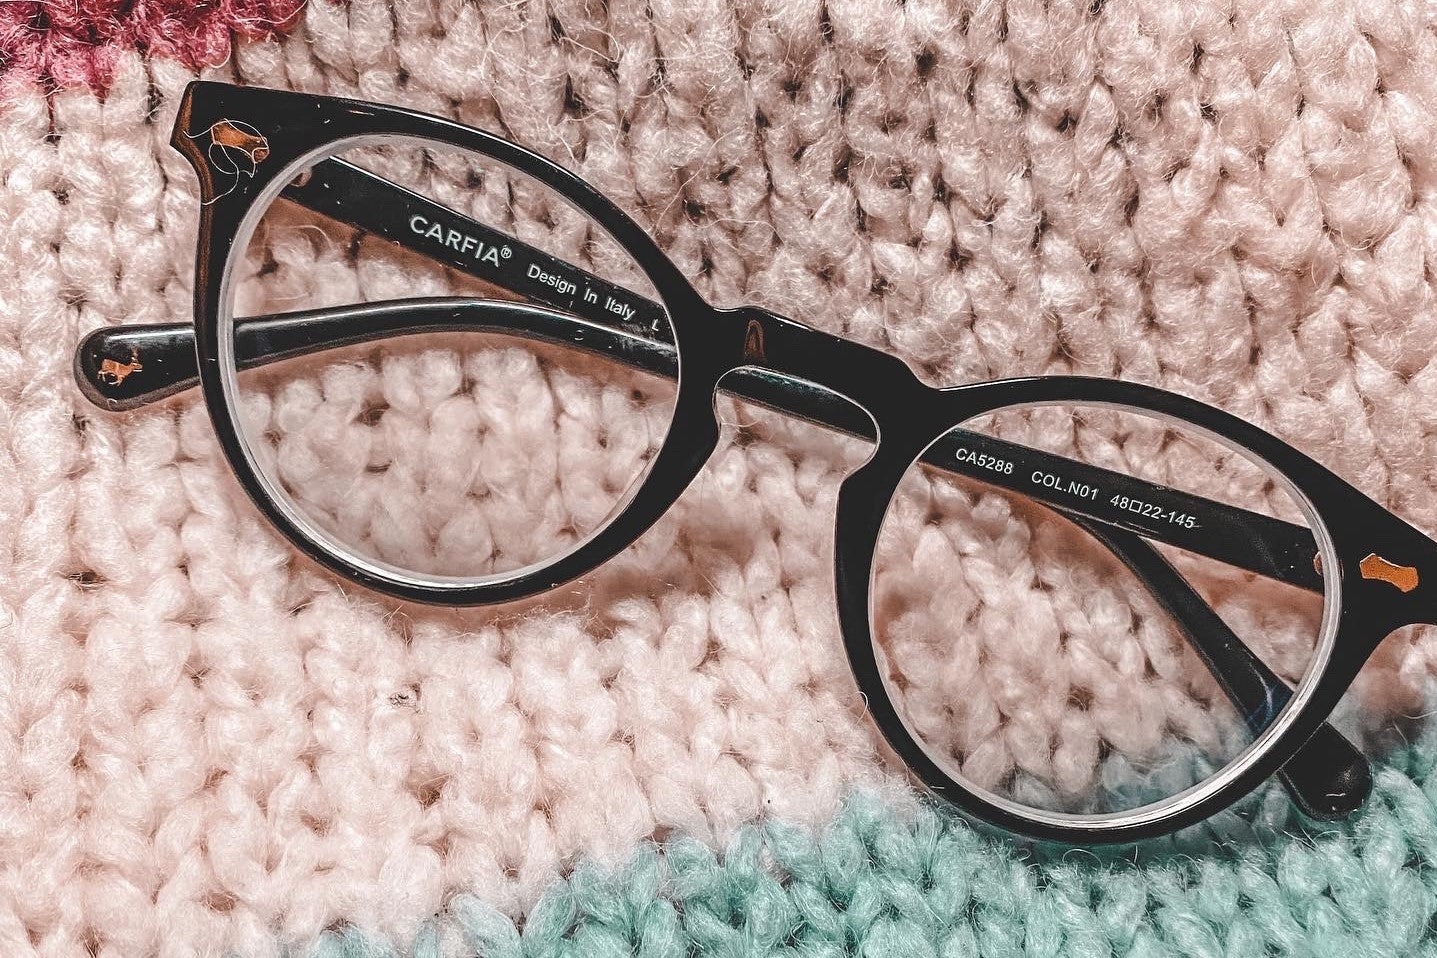 do prism glasses really work? | KOALAEYE OPTICAL